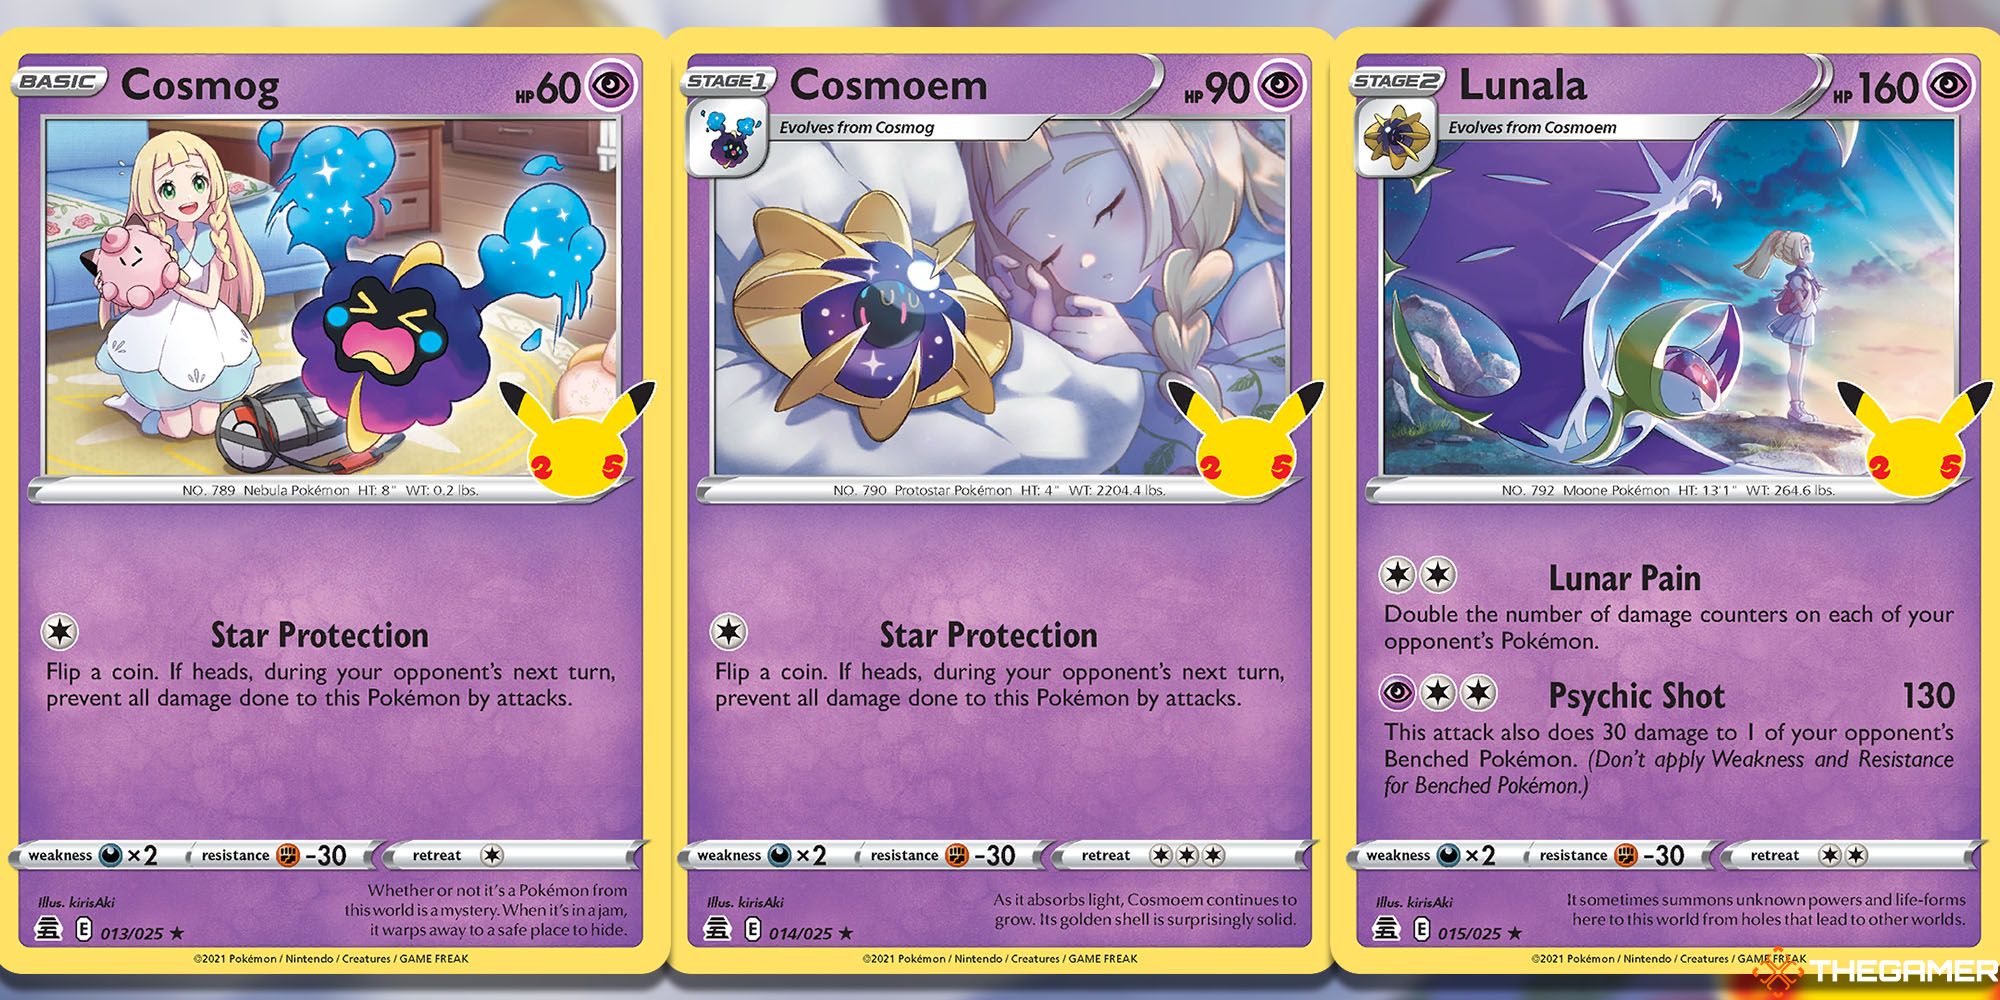 Cosmog (Celebrations #013), Cosmoem (Celebrations  #014), and Lunala (Celebrations #015) Pokemon TCG cards.